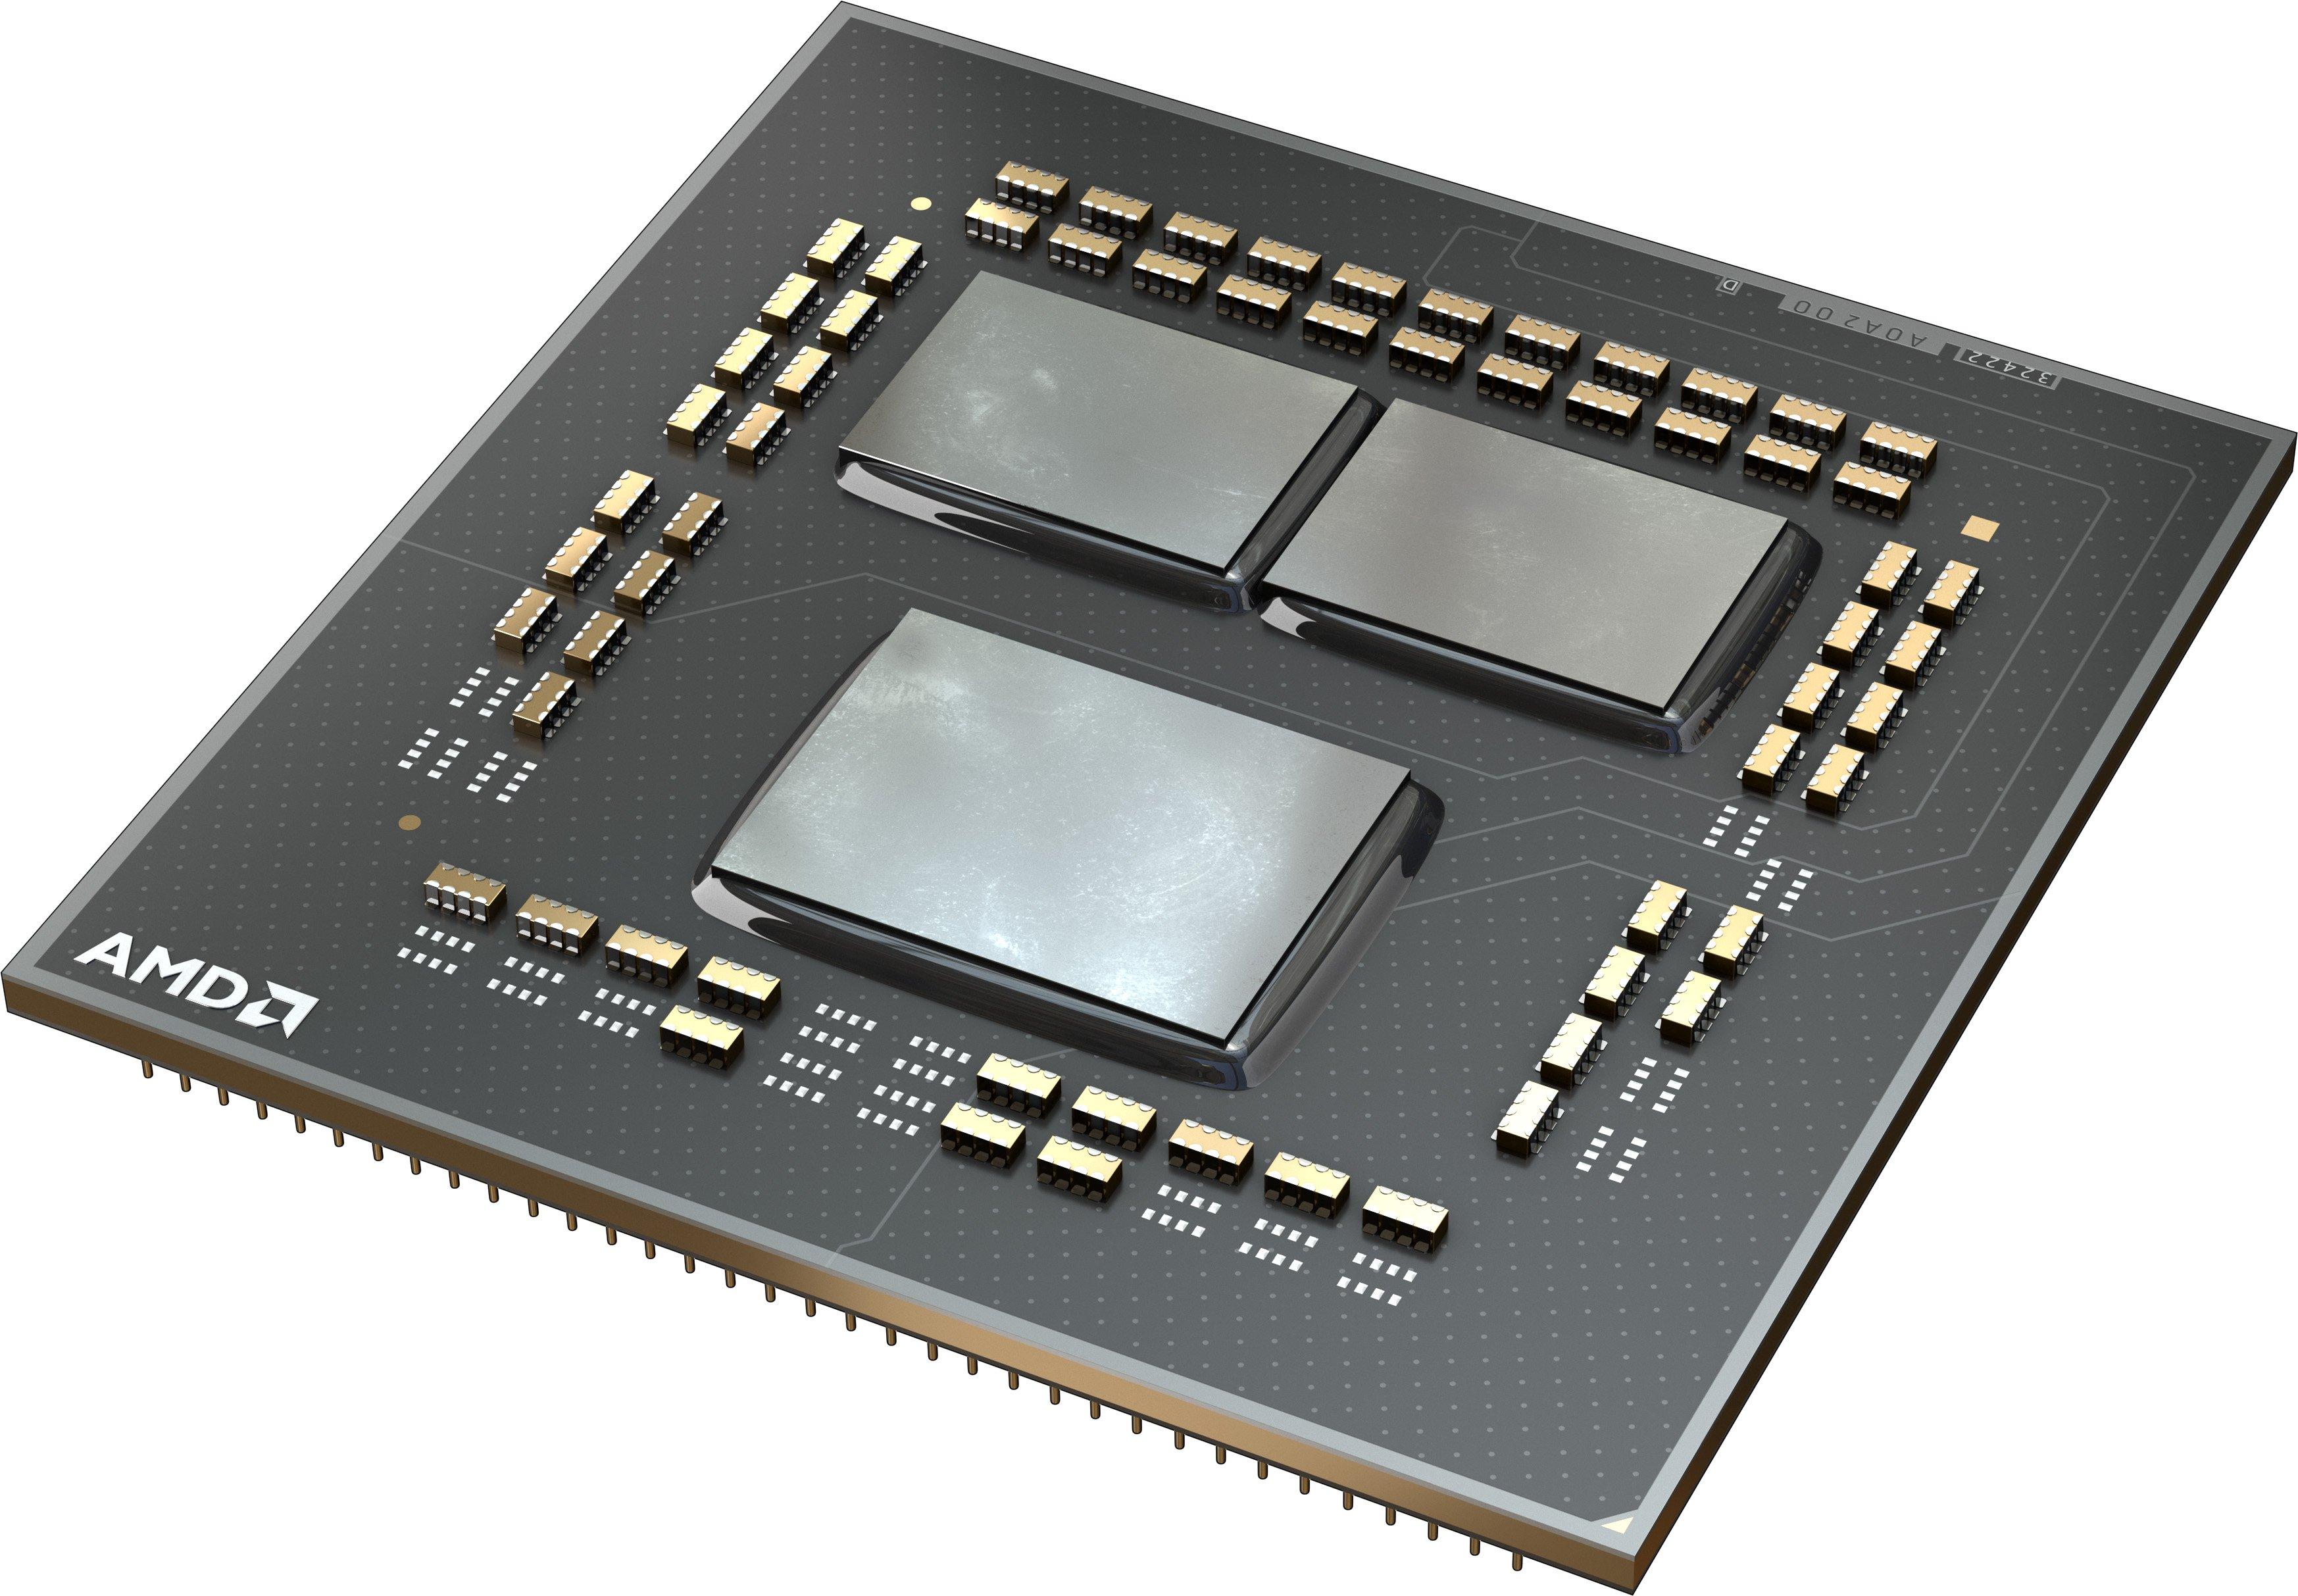 4.6 5700X Ryzen AM4 to AMD GHz Threads | 7 8-core Processor up 16 GameStop